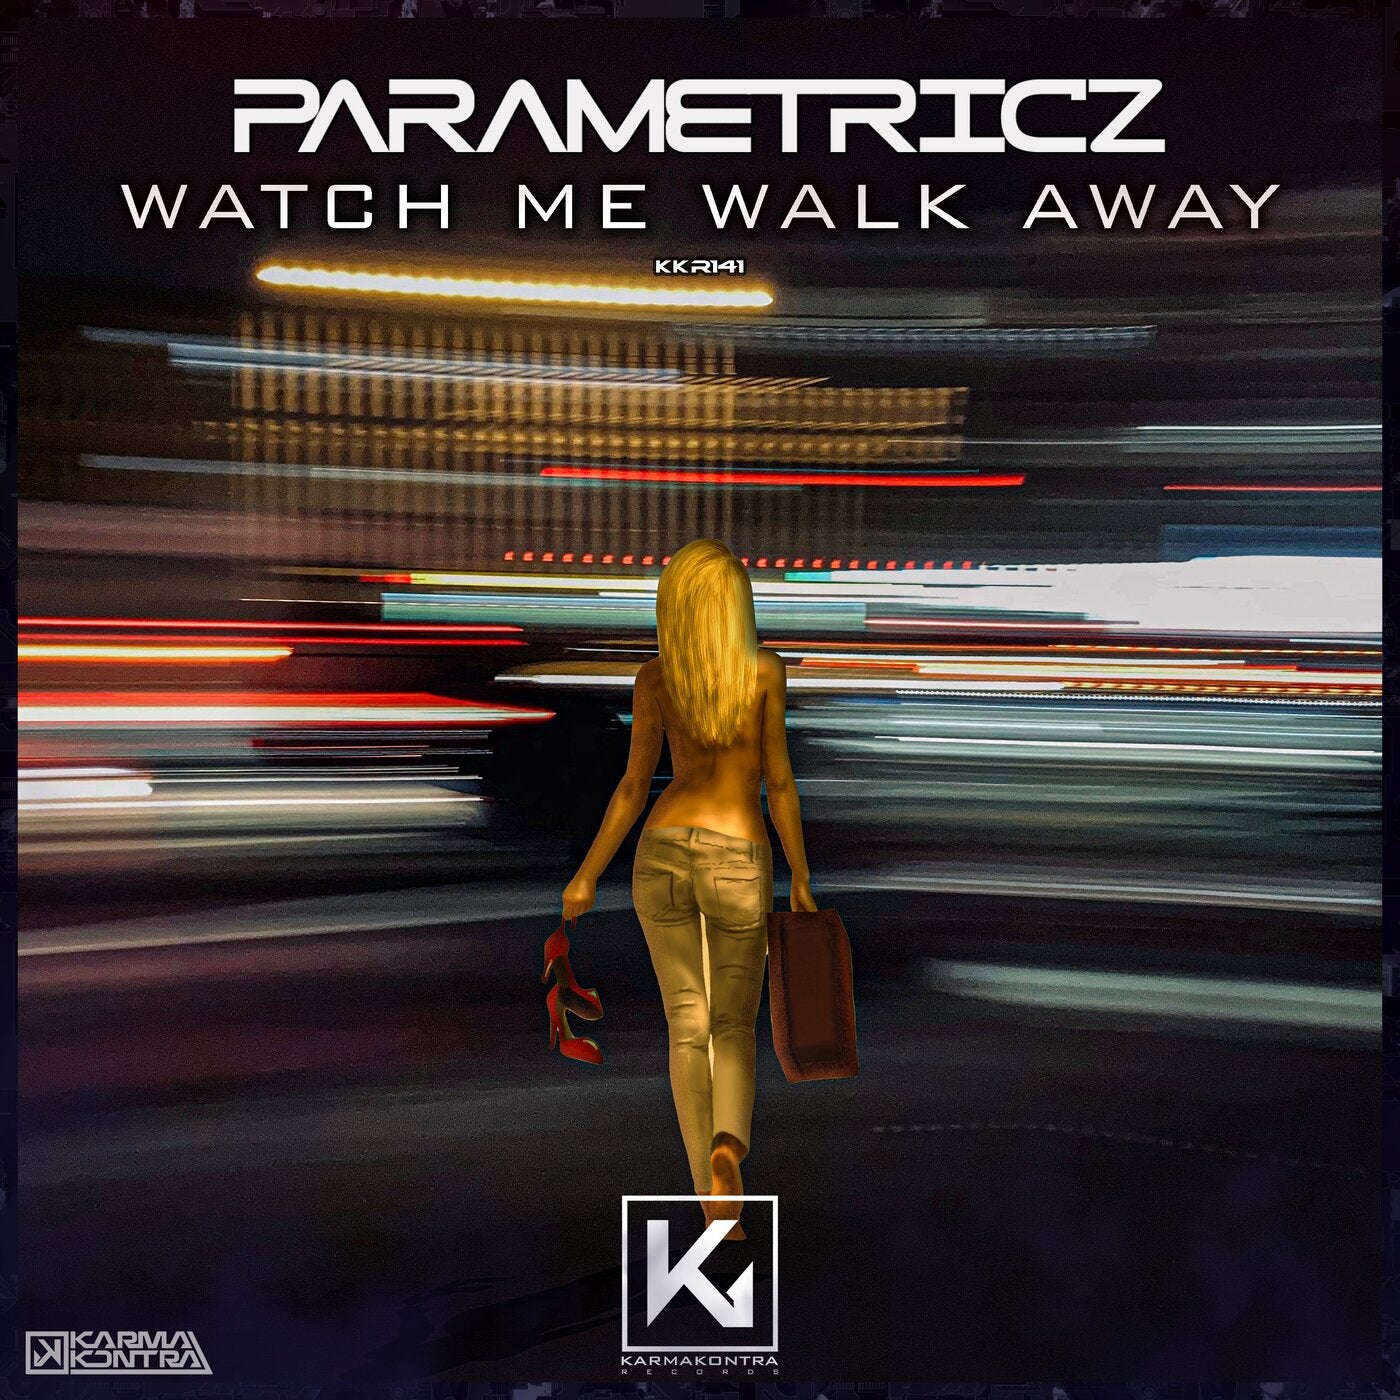 Watch Me Walk Away